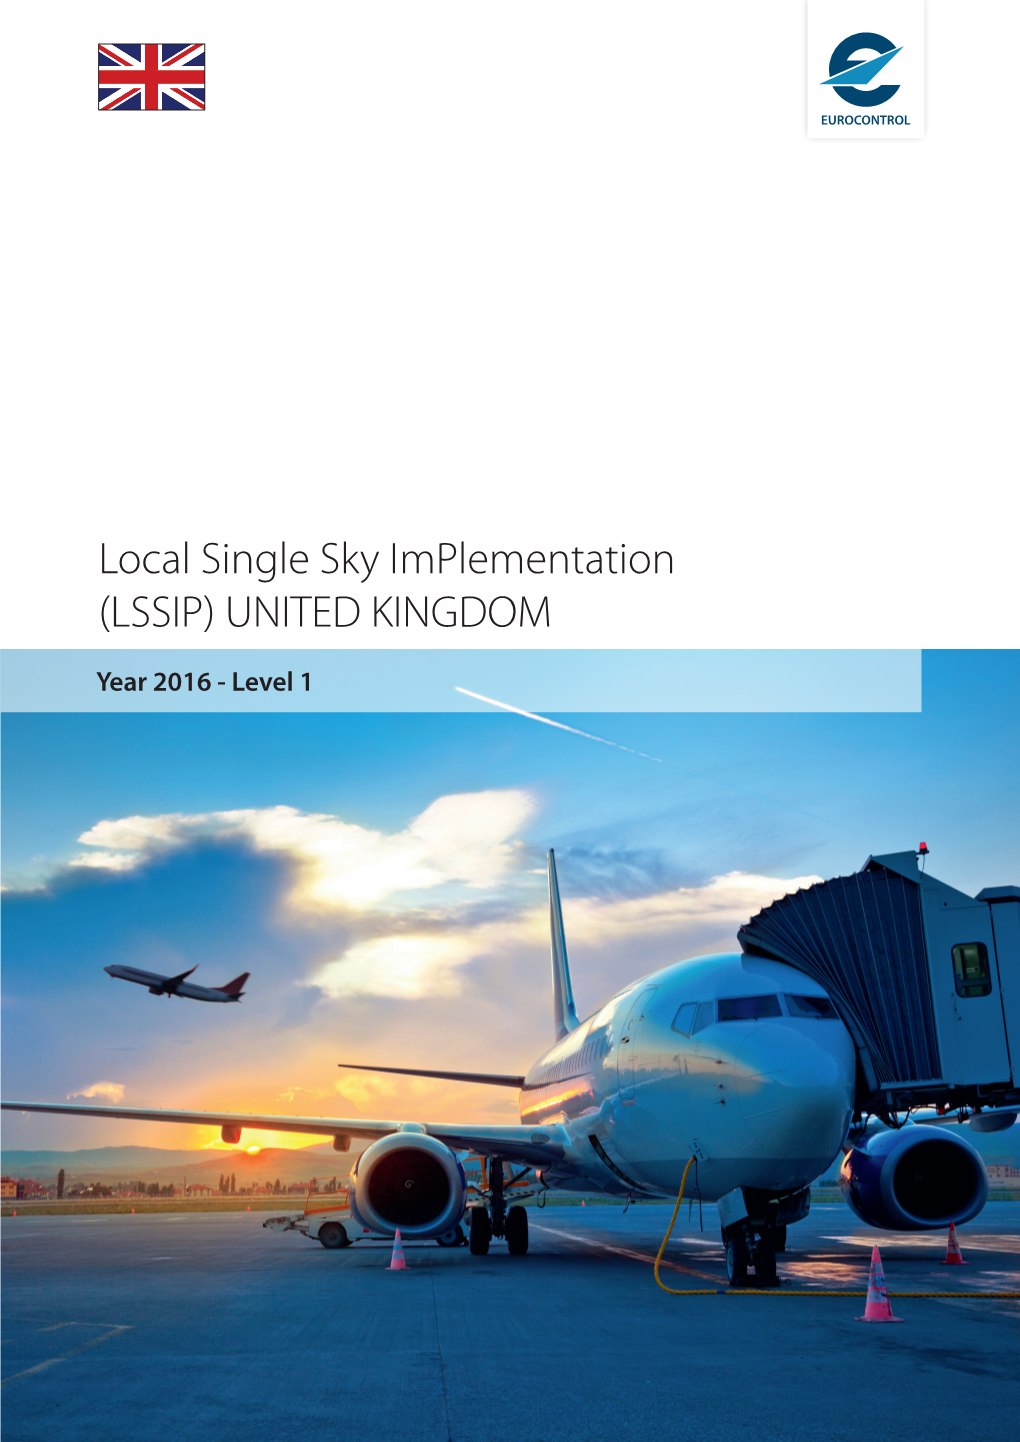 Local Single Sky Implementation (LSSIP) UNITED KINGDOM